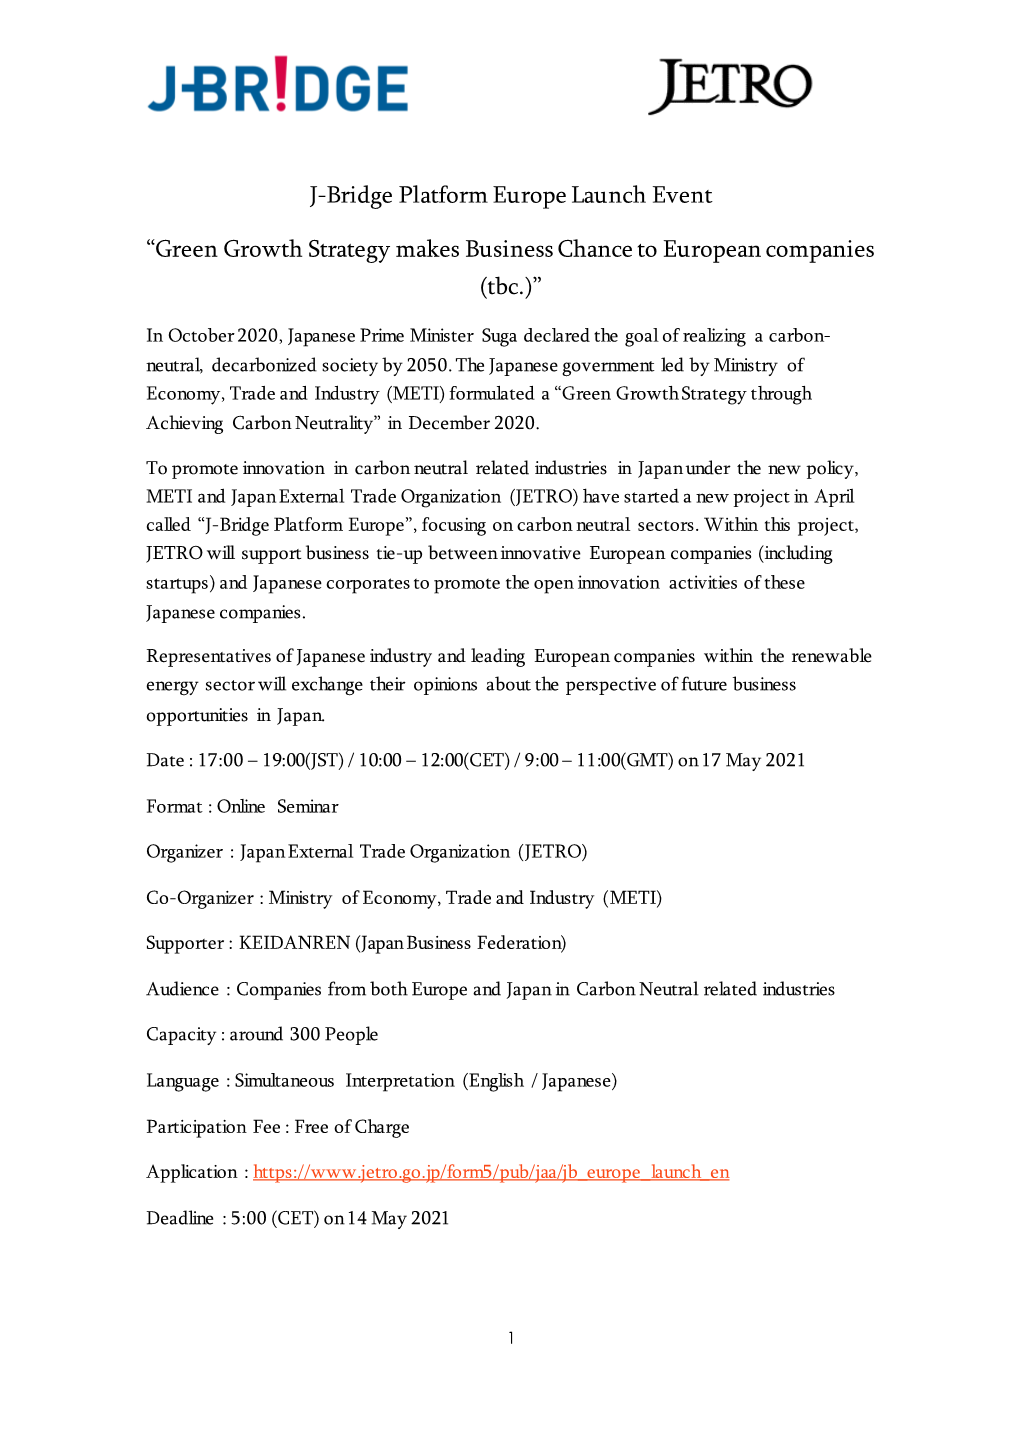 J-Bridge Platform Europe Launch Event “Green Growth Strategy